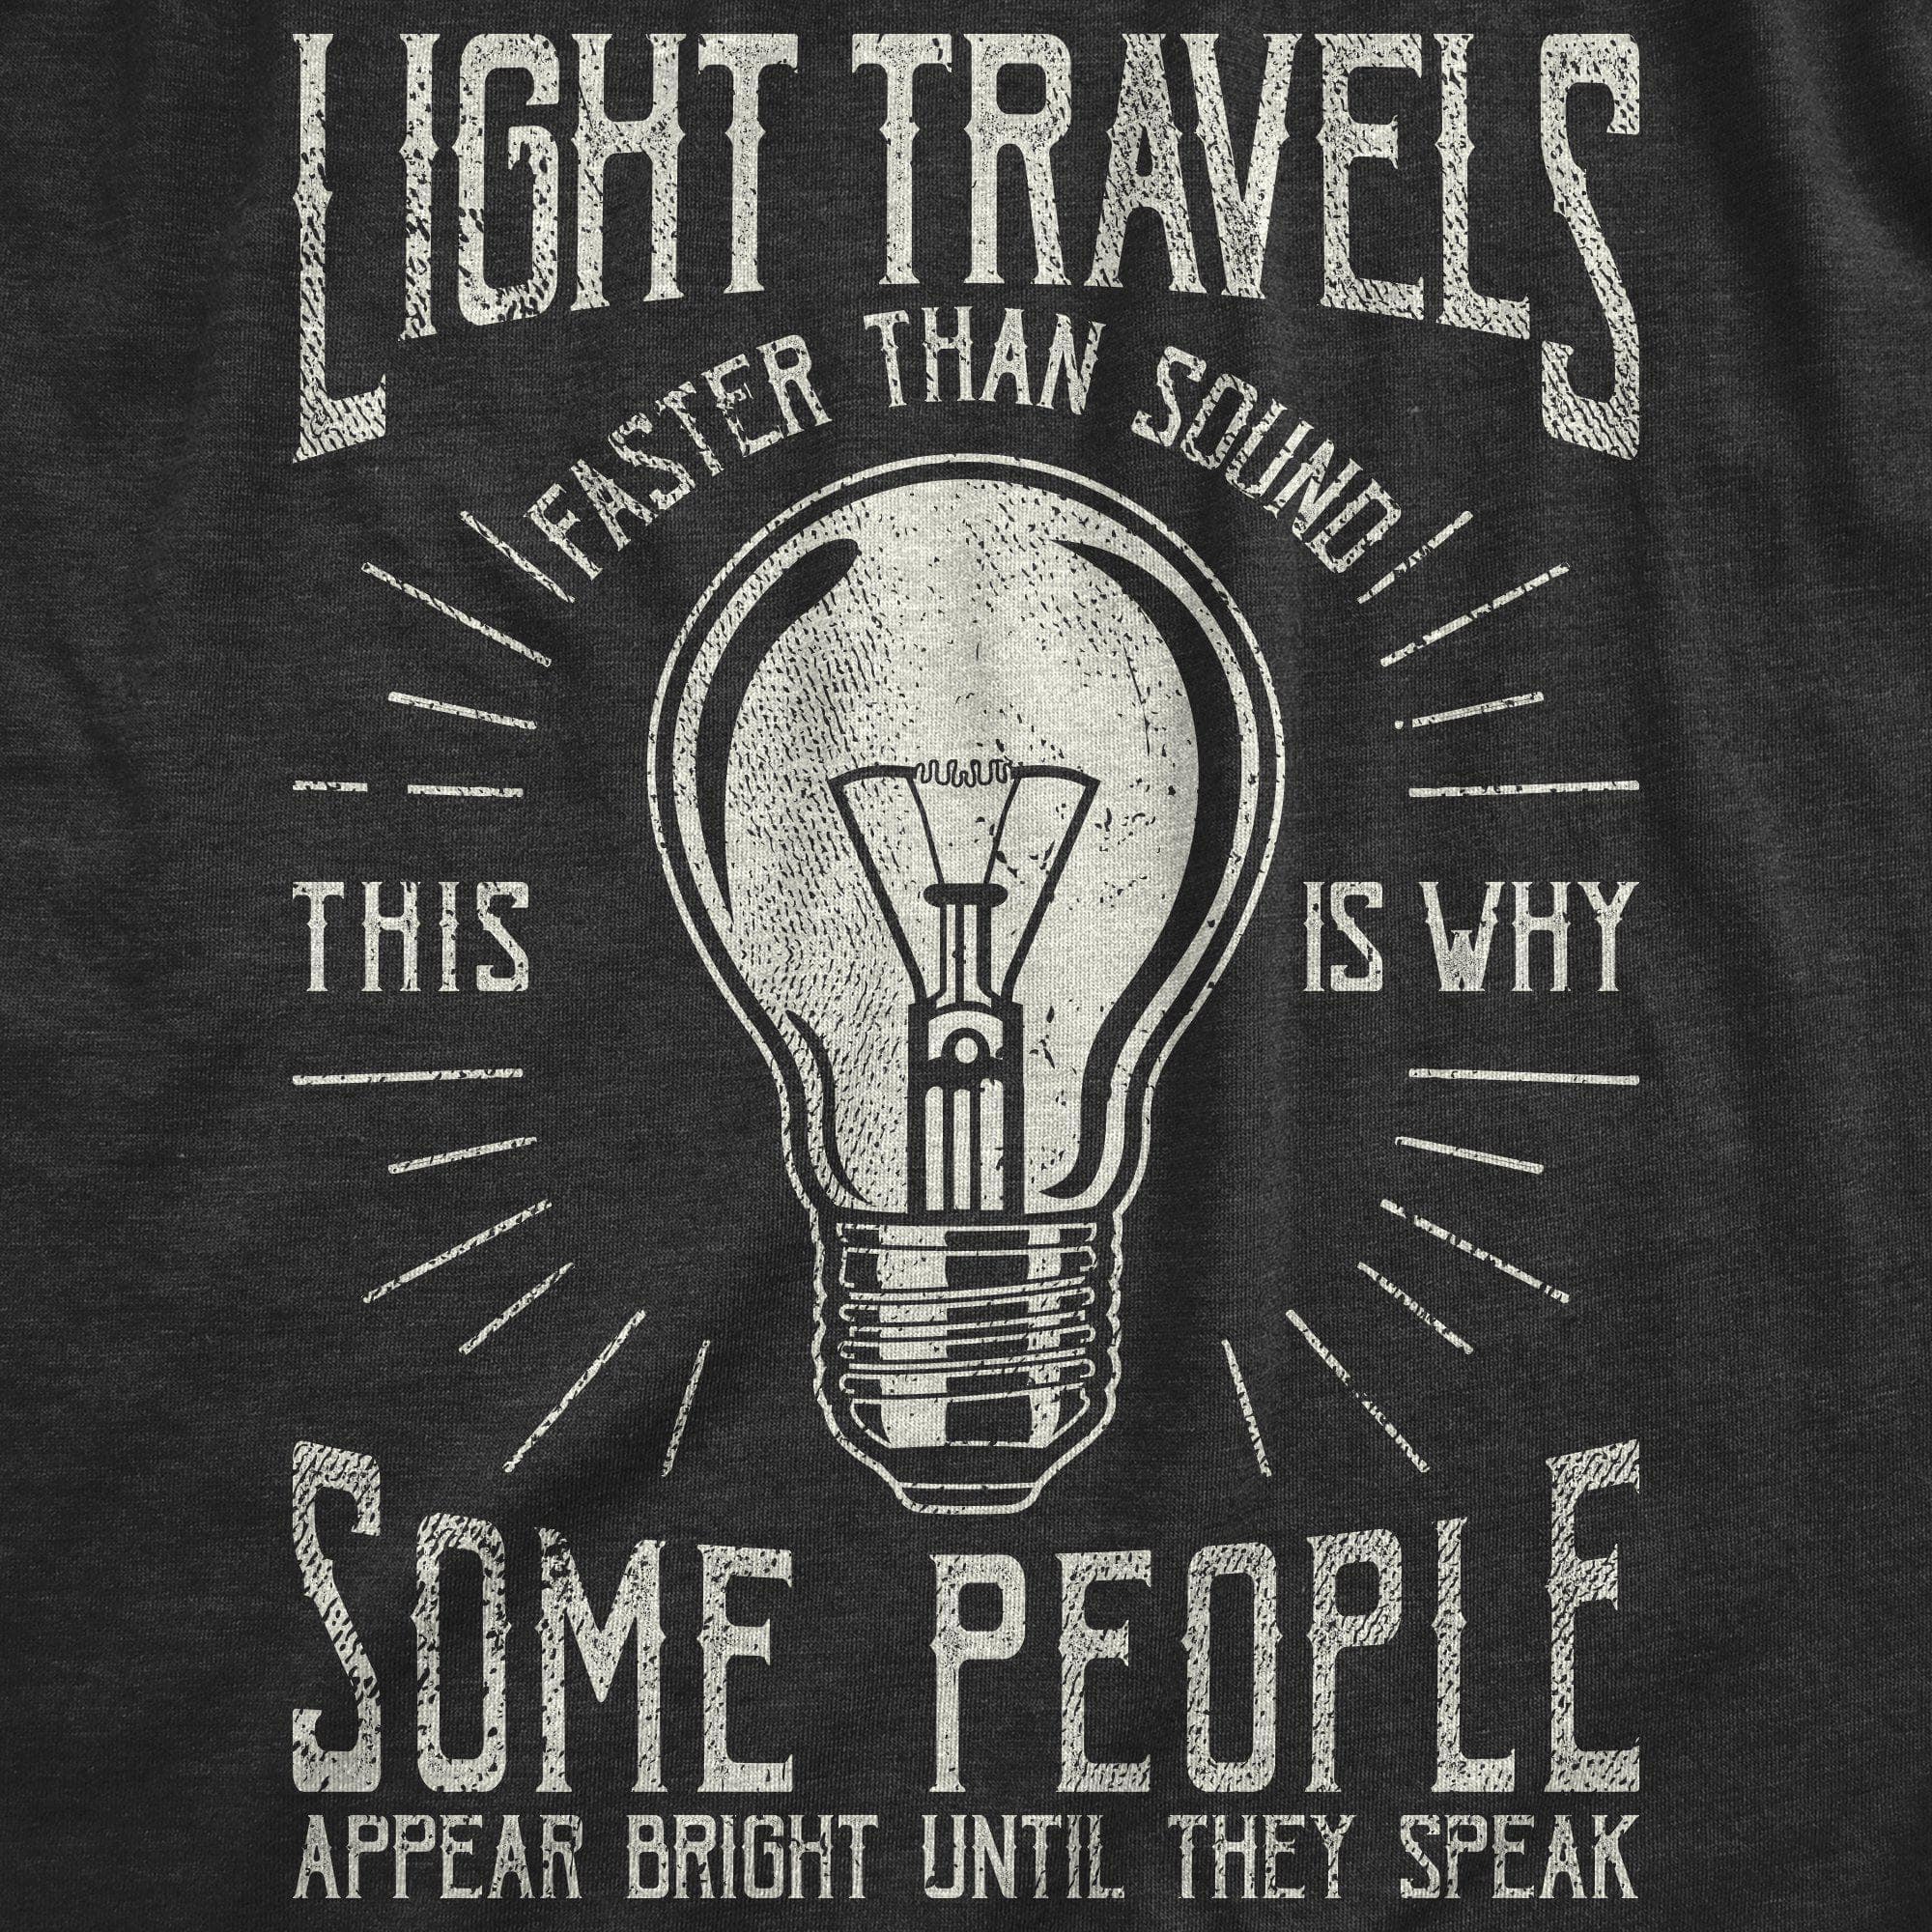 Light Travels Faster Men's Tshirt  -  Crazy Dog T-Shirts